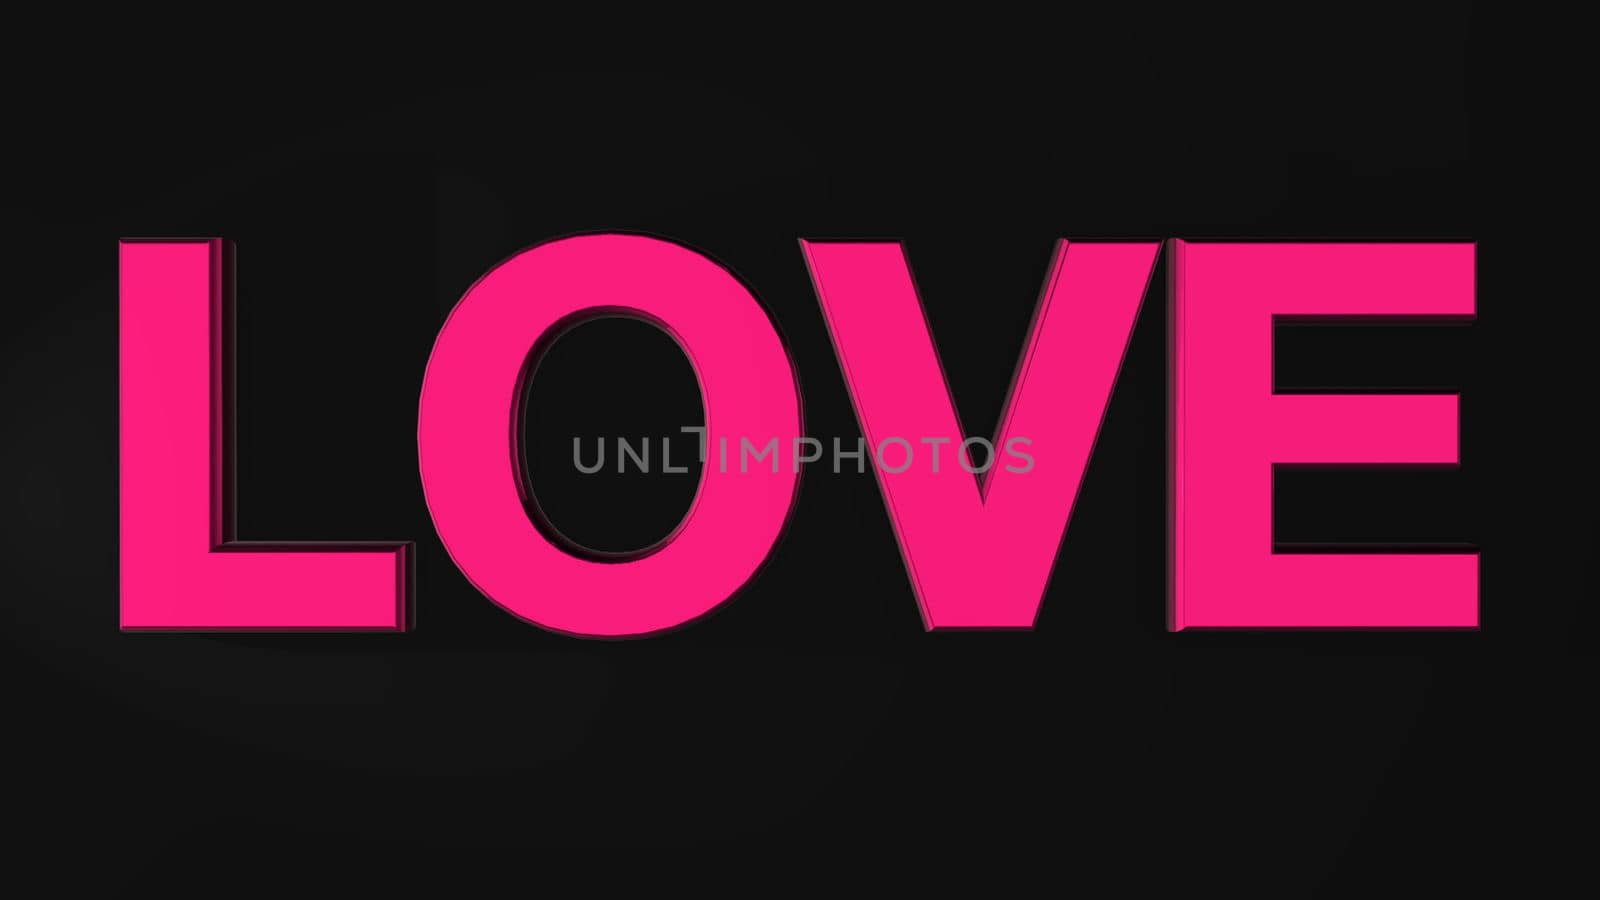 Three-dimensional word love on a dark background by nolimit046